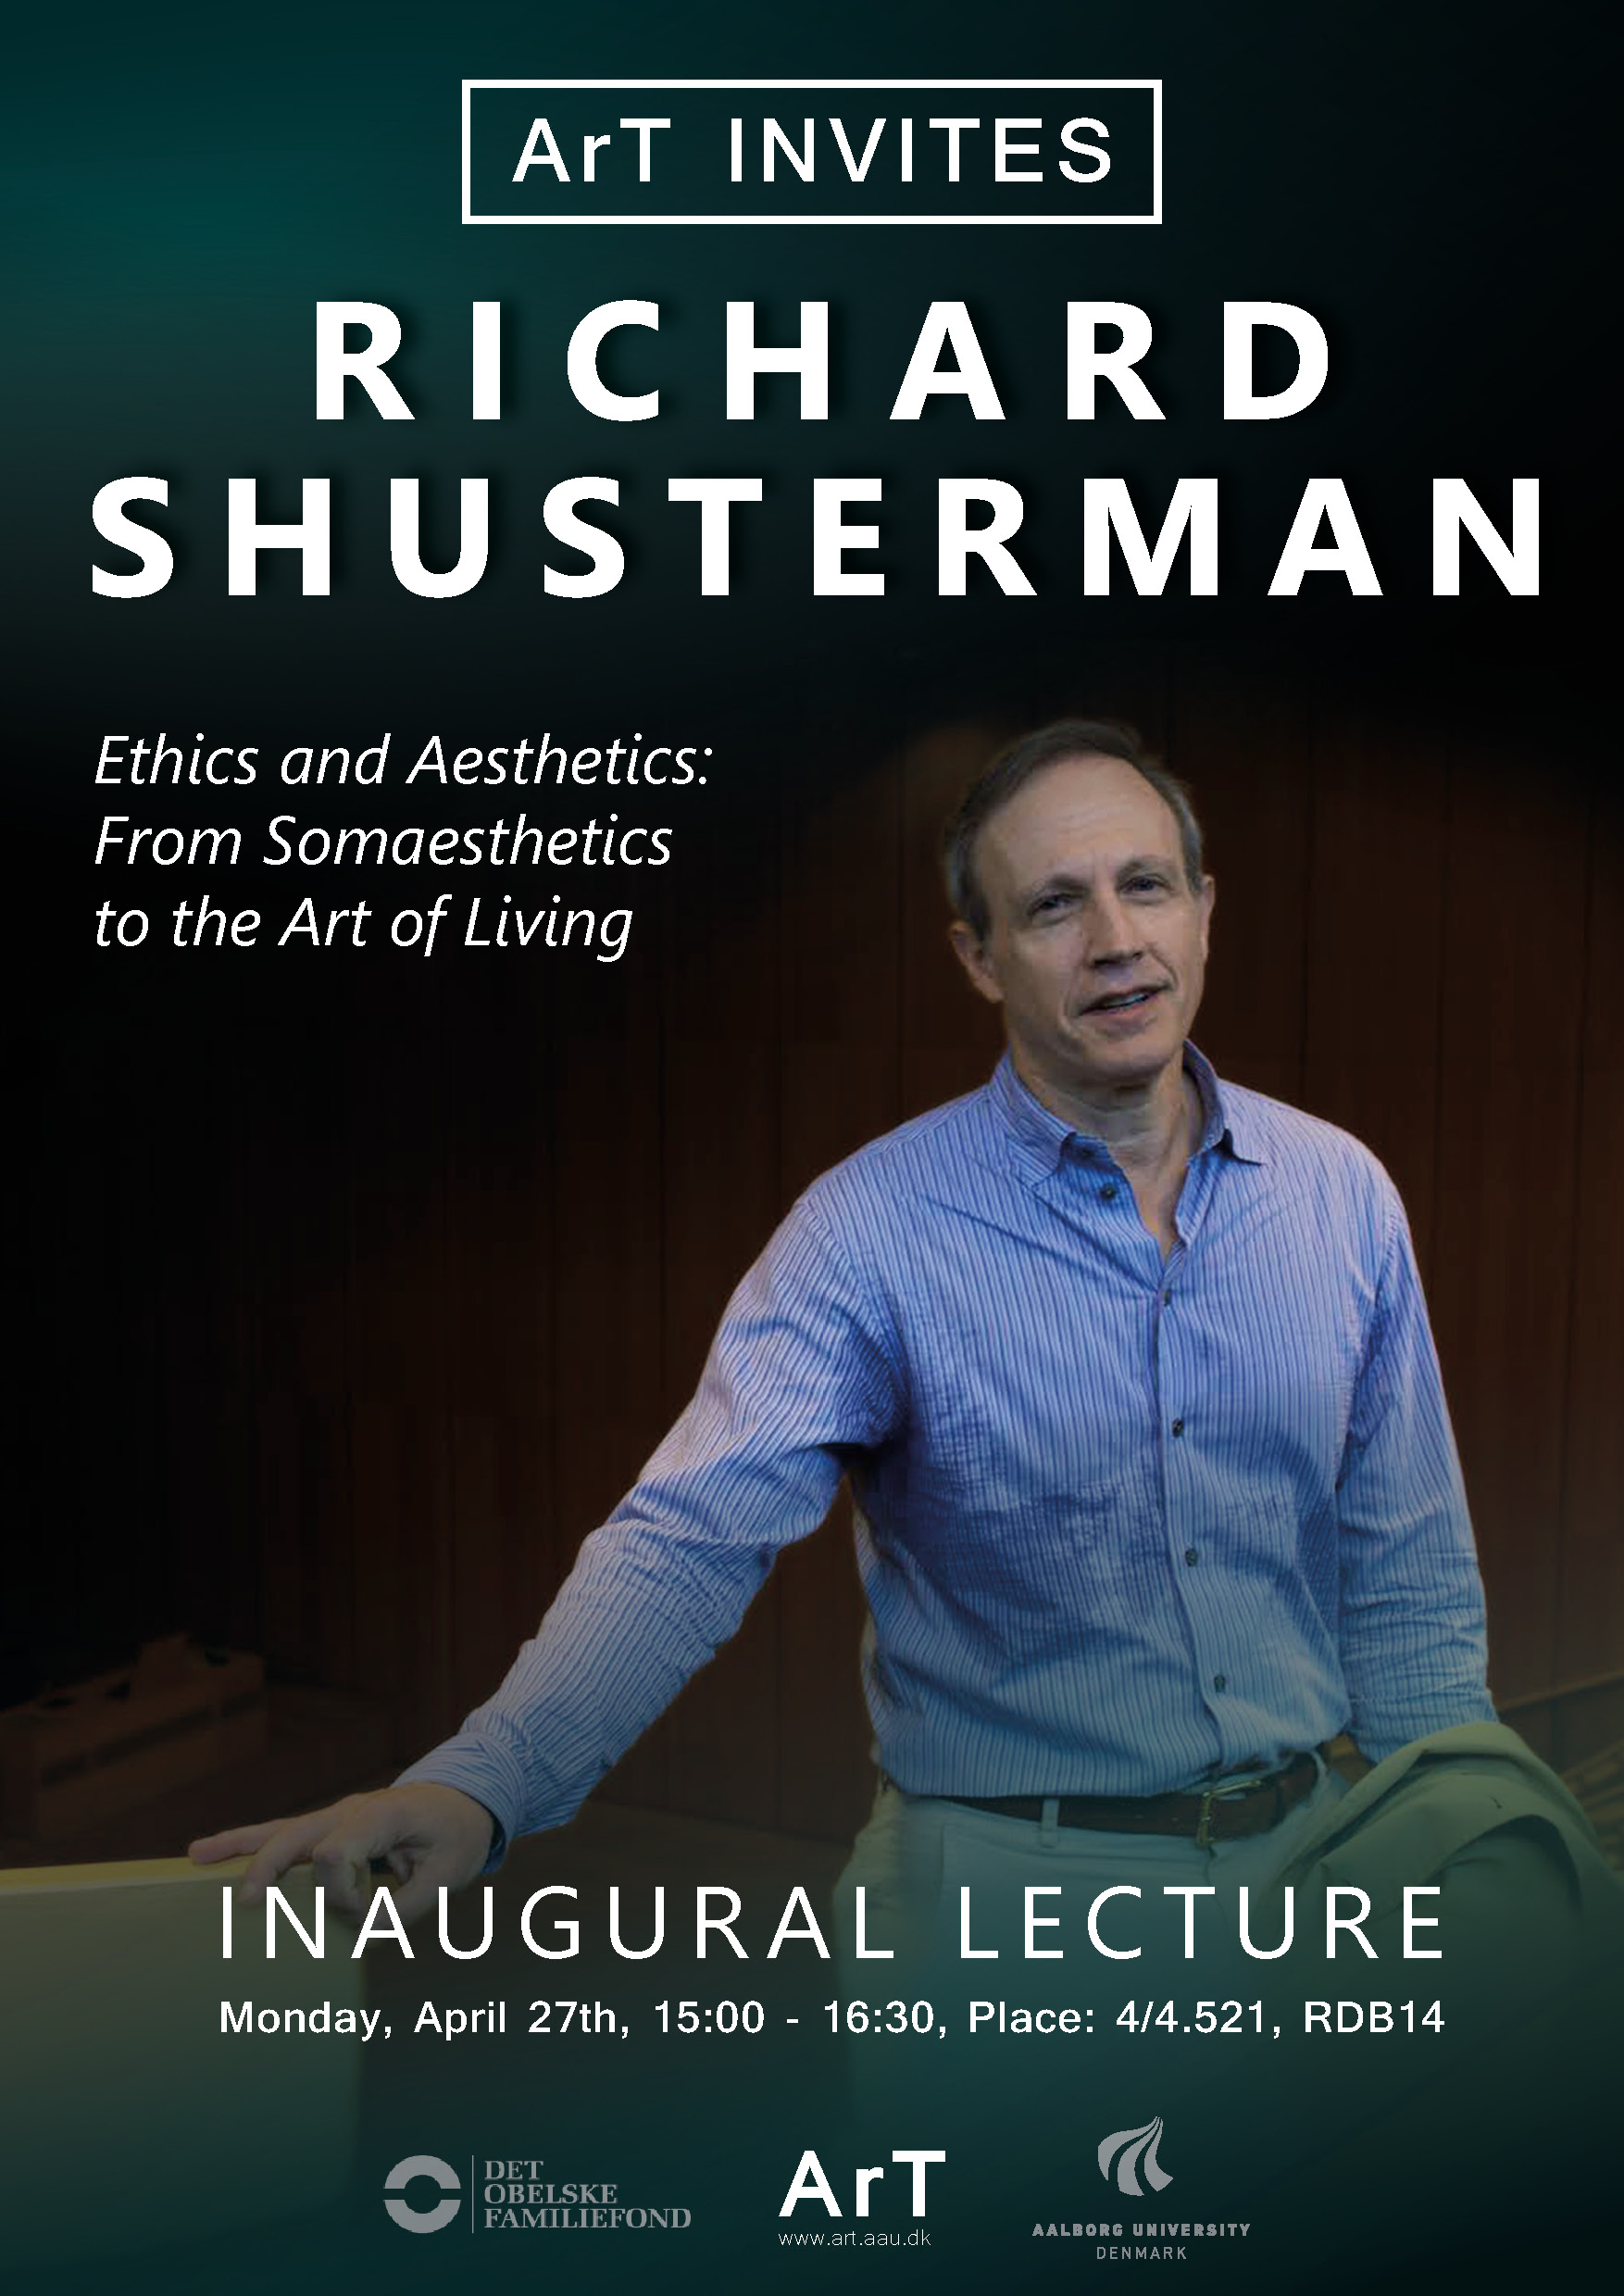 Inaugural lecture by Richard Shusterman